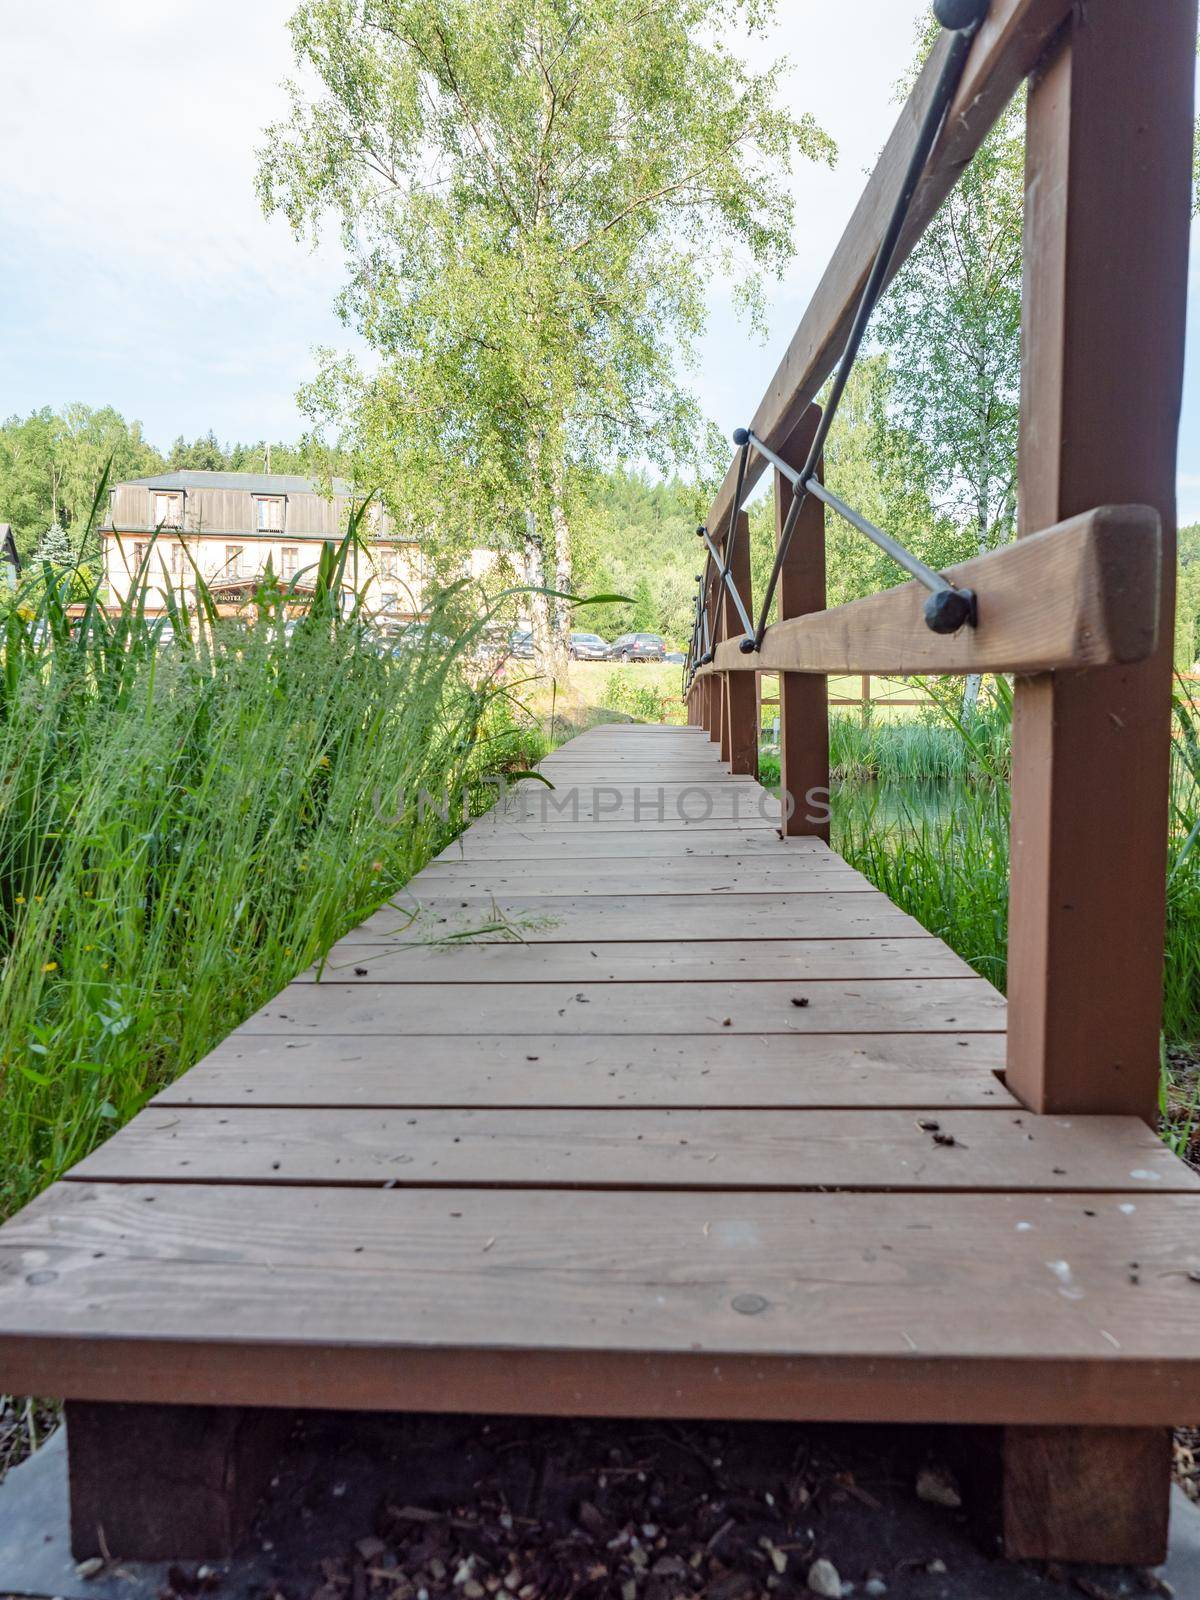 Romantic garden with wooden footbridge. Morning walk by rdonar2